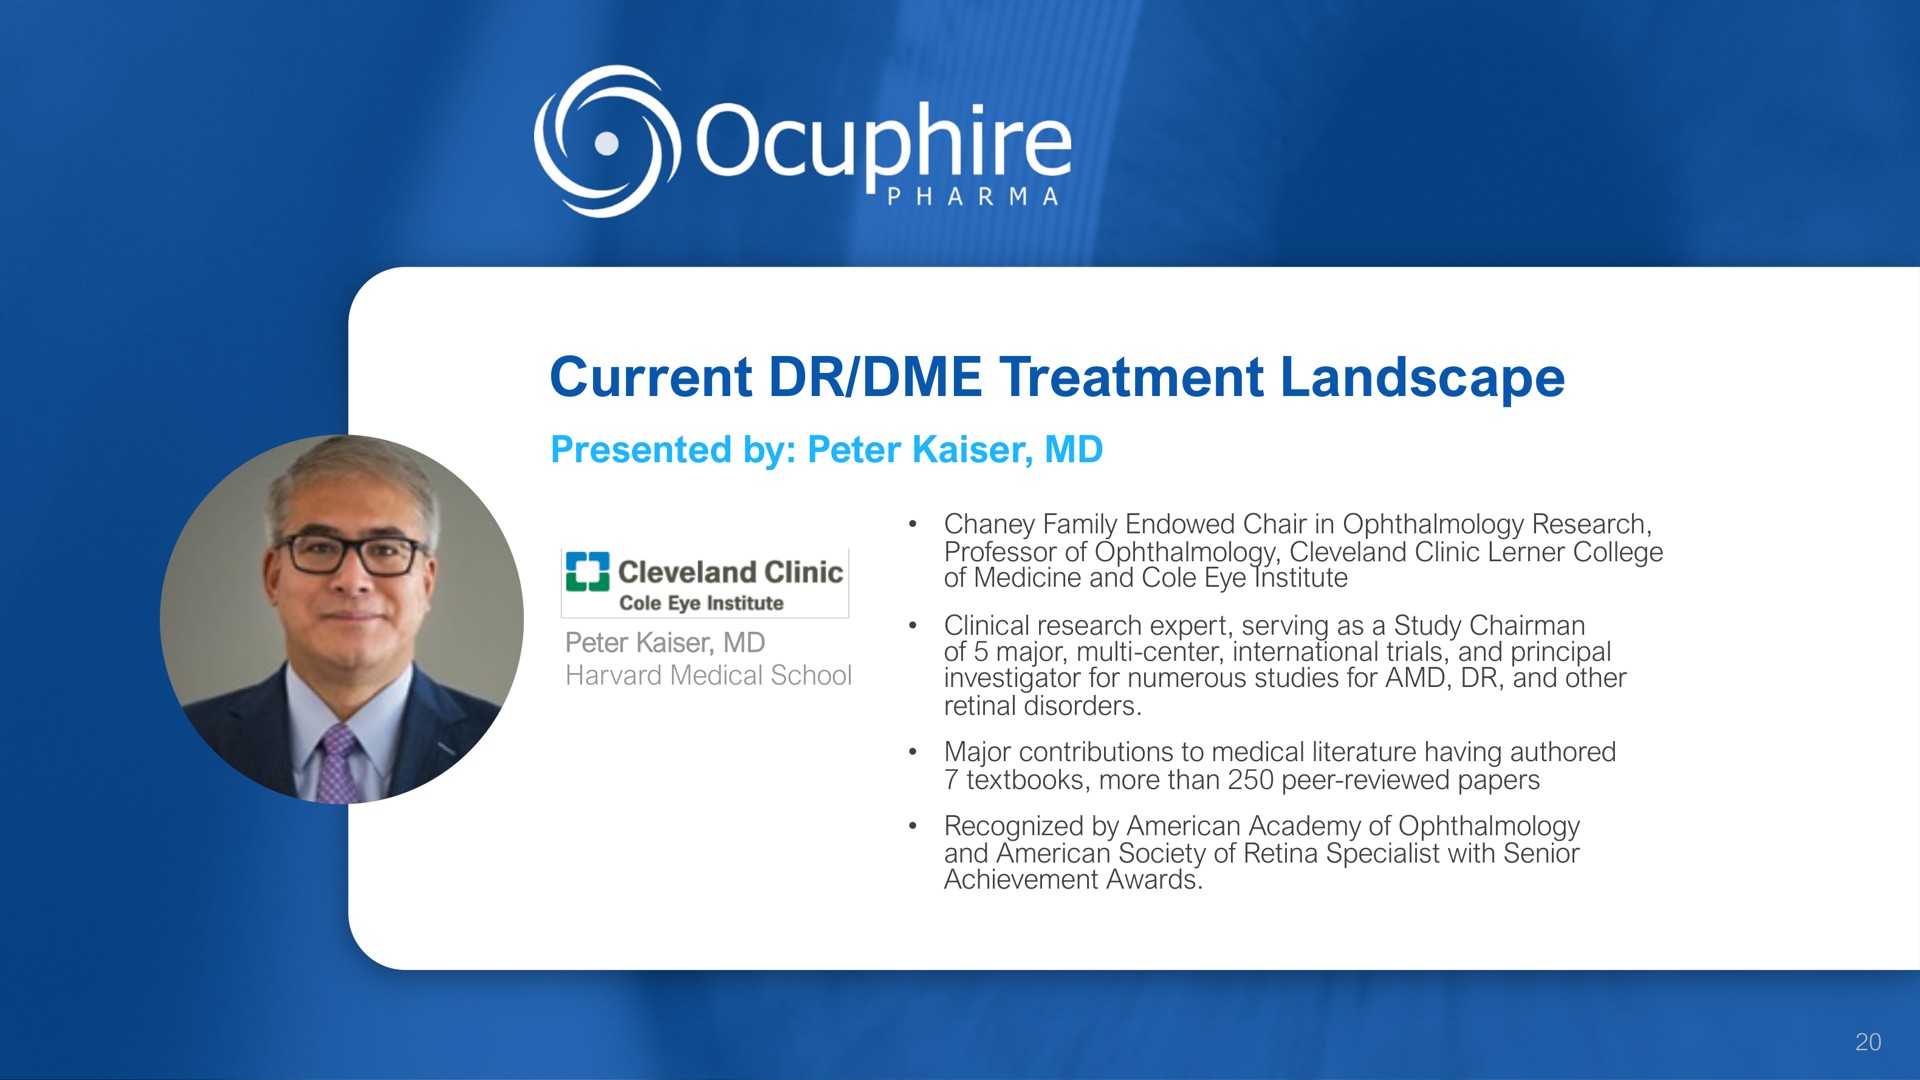 current treatment landscape | Ocuphire Pharma